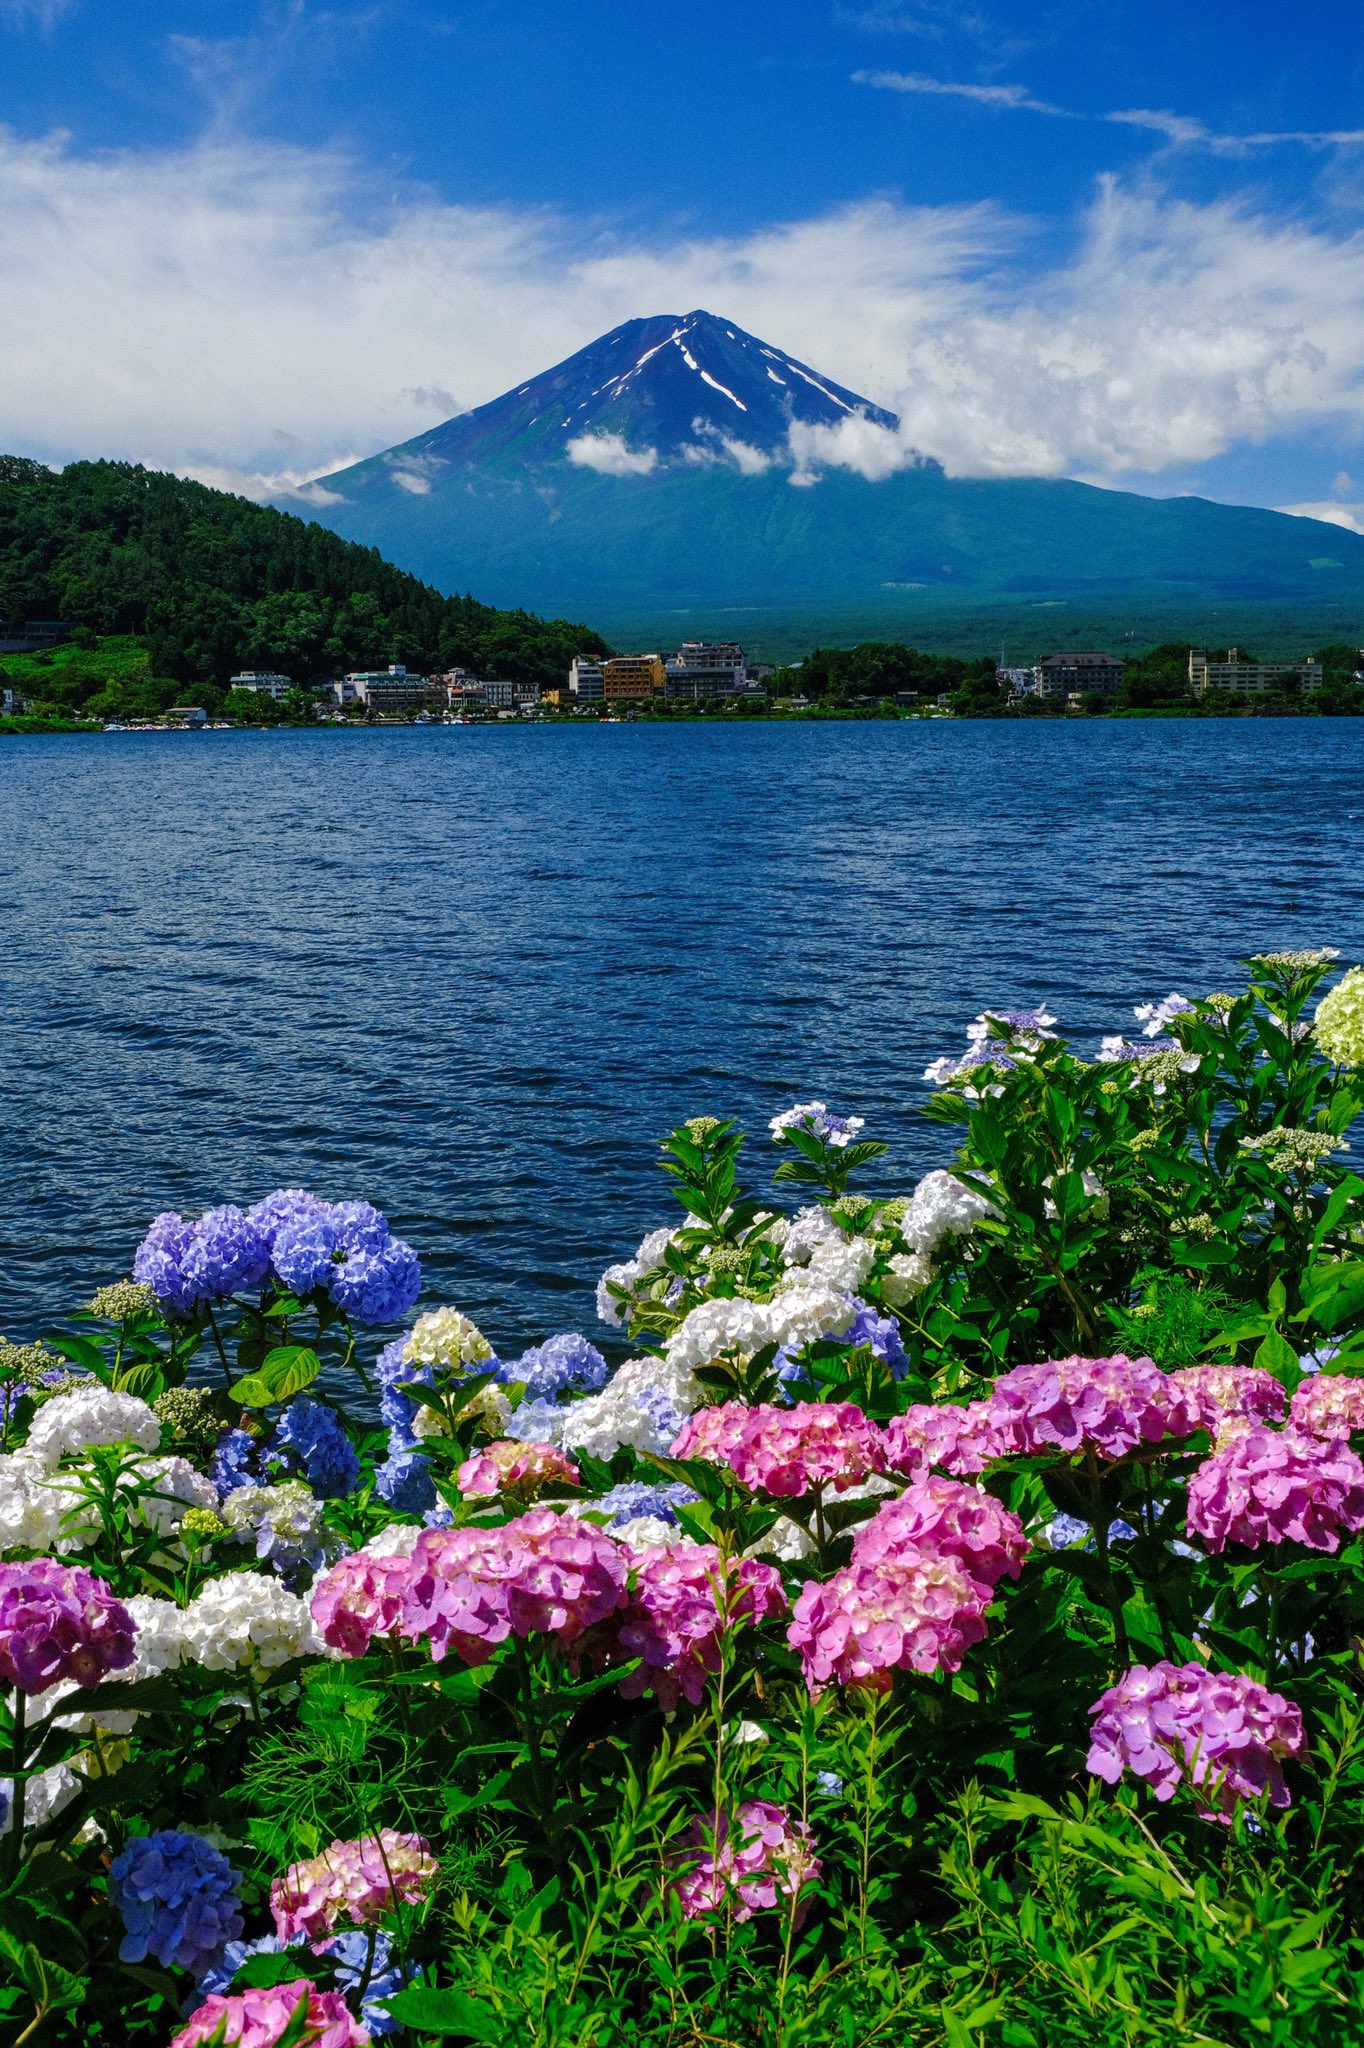 Fujiyama 先日の富士山麓で出会った 花と富士山です 貴重な梅雨の晴れ間でした 全て縦版なのでスマホの待受にでも使って下さい 富士山 花 壁紙 縦位置 T Co Wcuq4skkmr Twitter